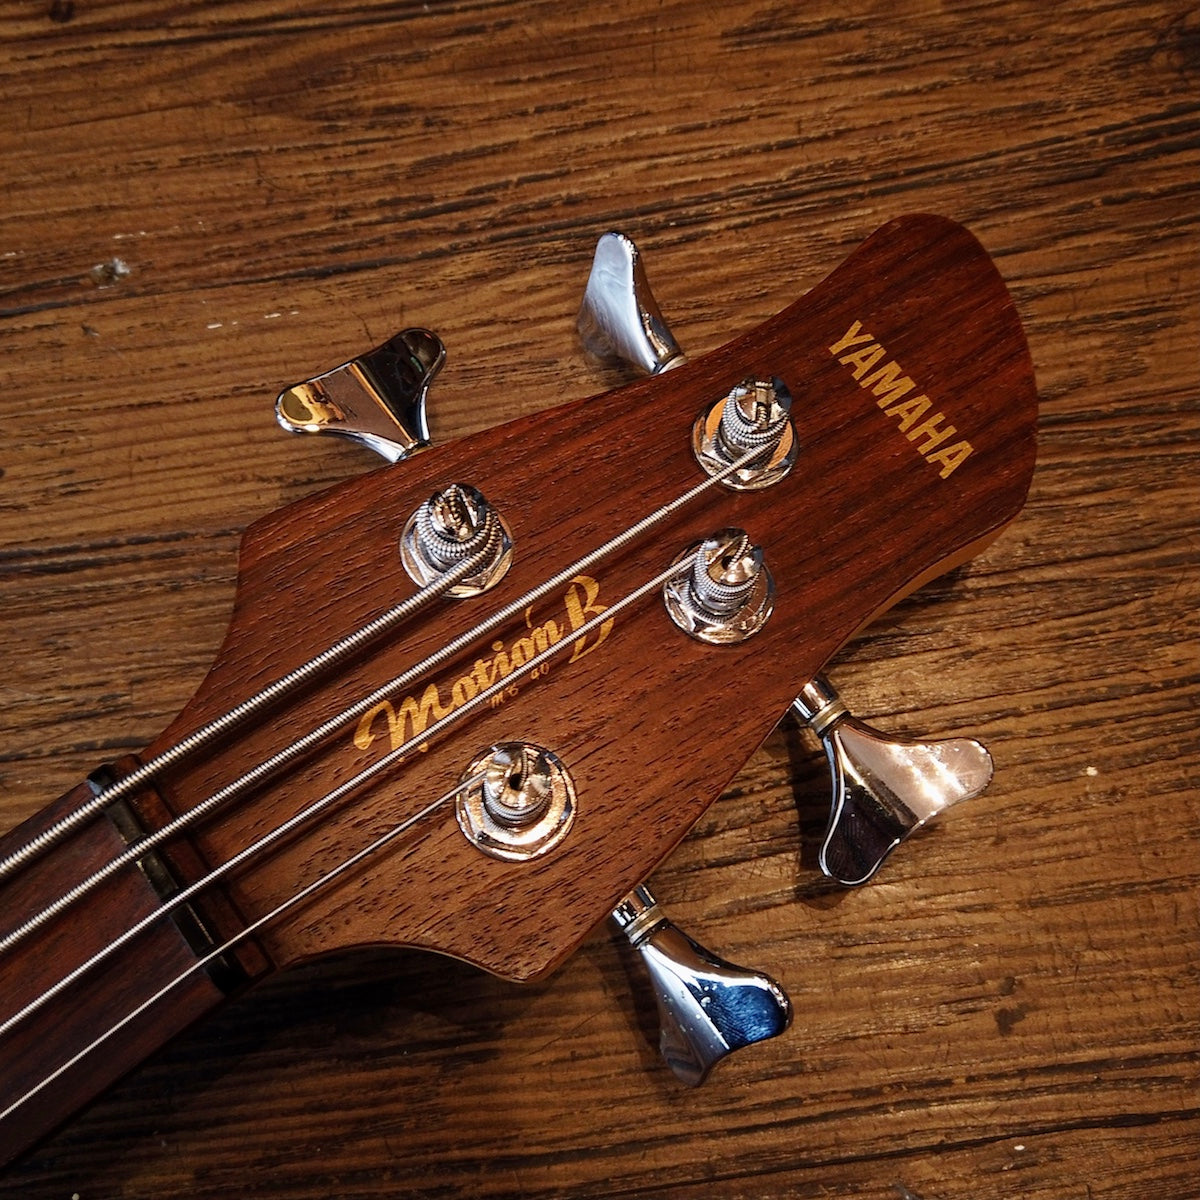 Yamaha Motion B MB-40 Electric Bass Medium Scale -GrunSound-b477-